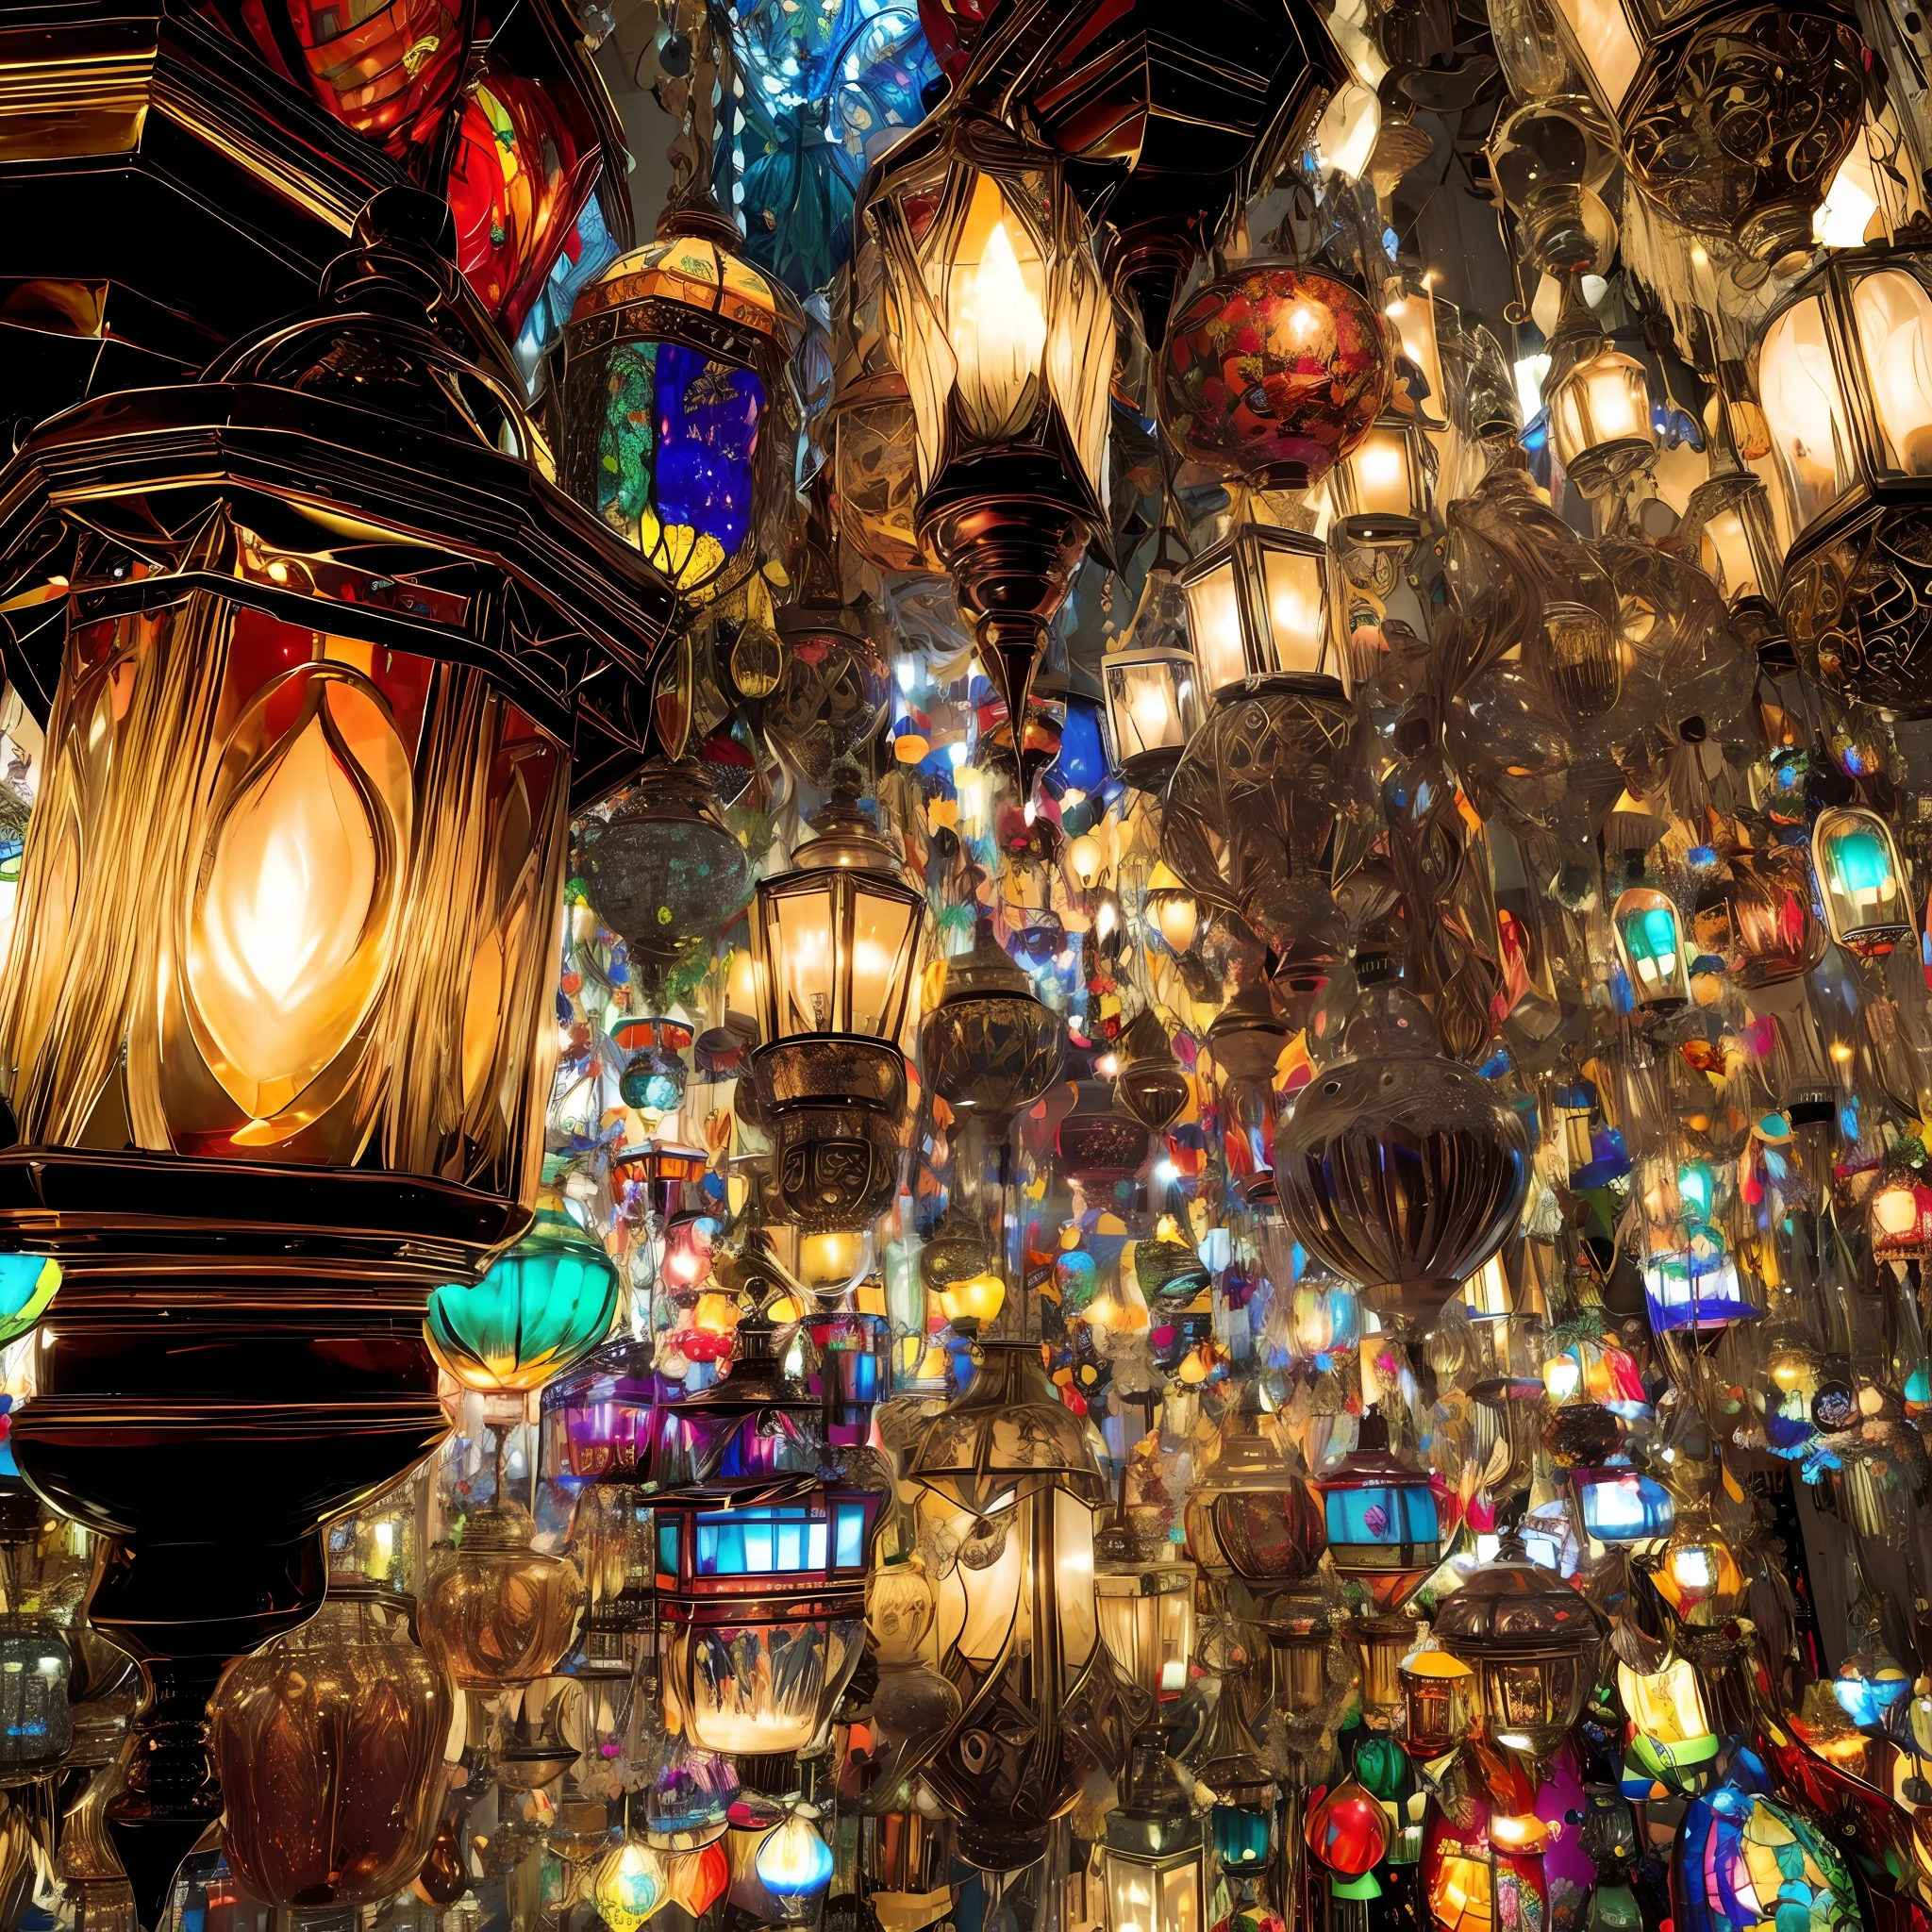 a large number of 燈 hanging from the ceiling in a store, beautiful lit 燈, glowing 燈, 複雜的燈光, colorful 燈籠, 在阿拉伯市場市集內, 令人驚嘆的燈光, 錯綜複雜的閃閃發光的氣氛, shining 燈, 耀眼的燈光, 燈籠, 令人著迷的, 美麗的燈光, 許多發光的燈, 美麗的燈光, 很多燈, 令人驚嘆的燈光 shining, 燈, 神秘的燈光